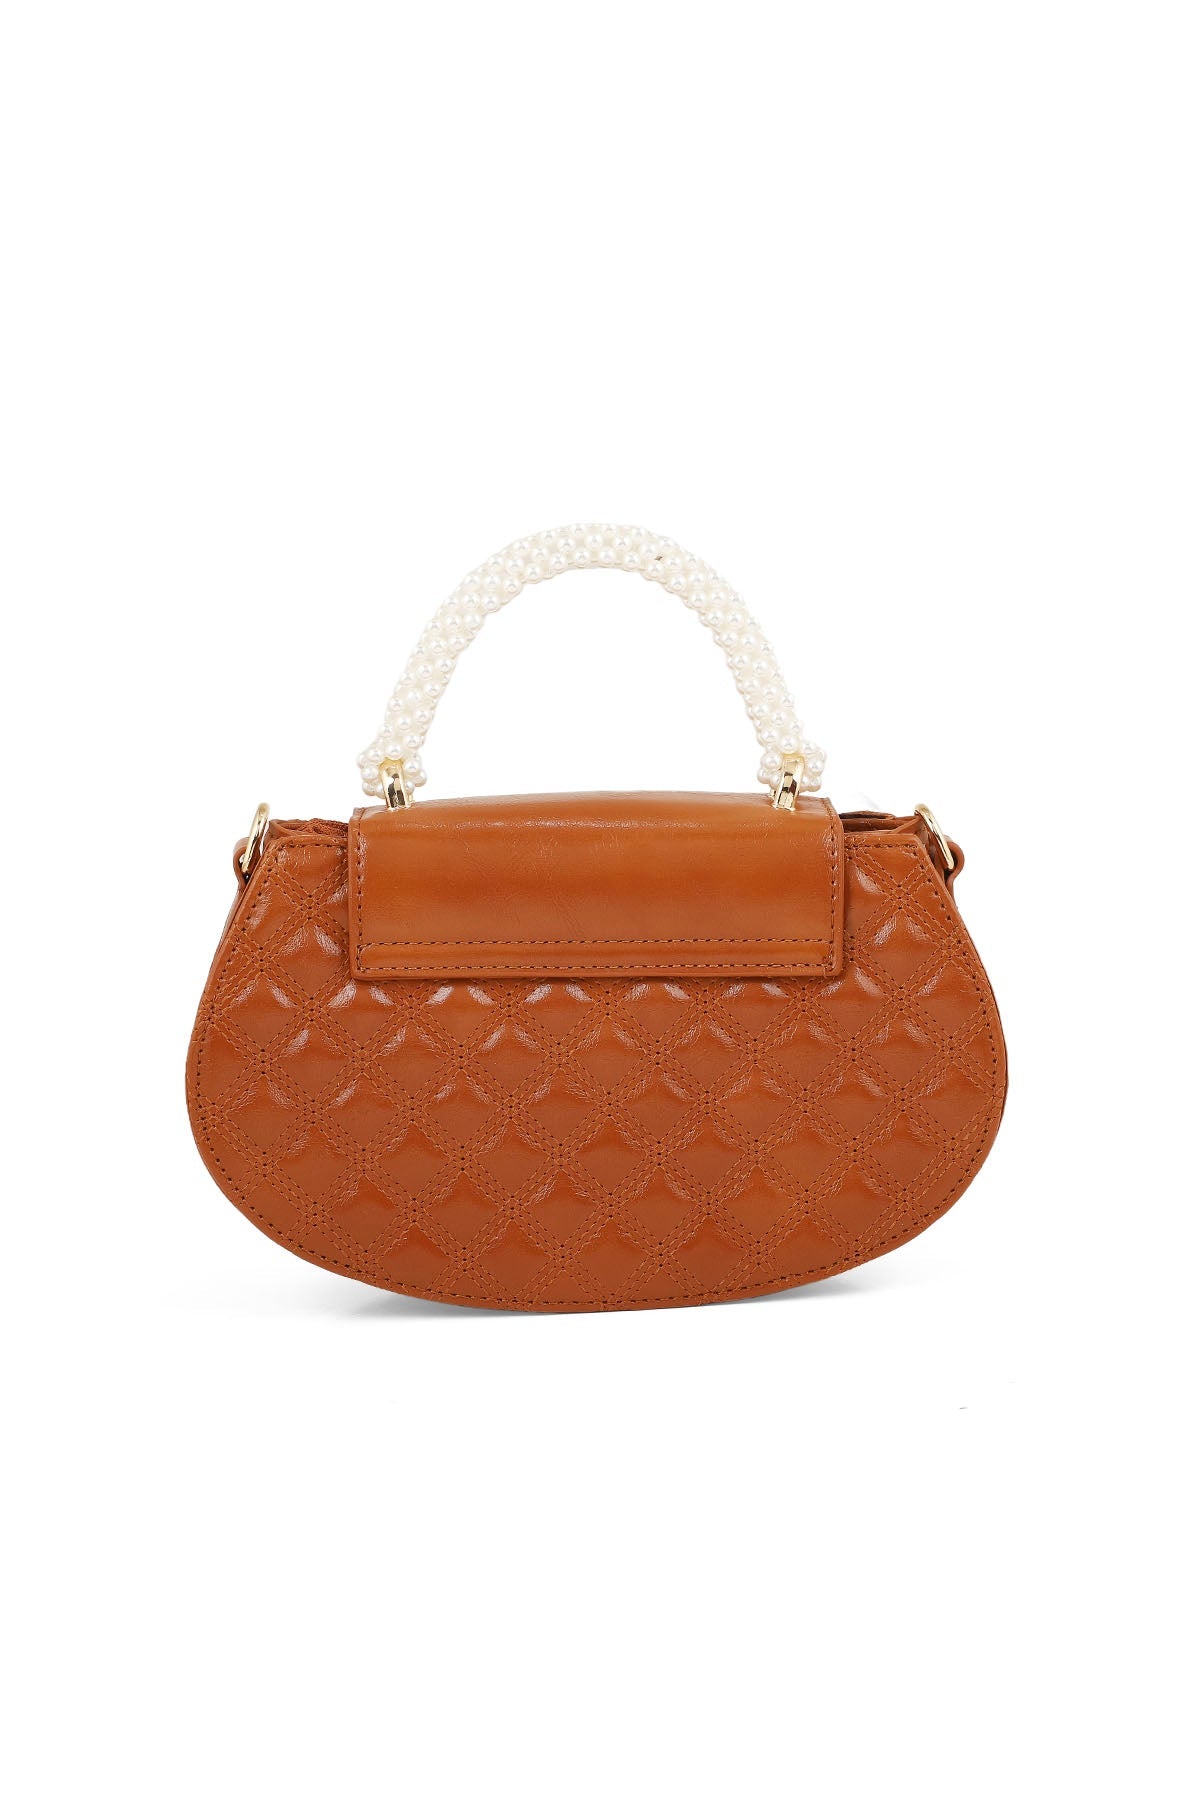 Top Handle Hand Bags B15079-Brown